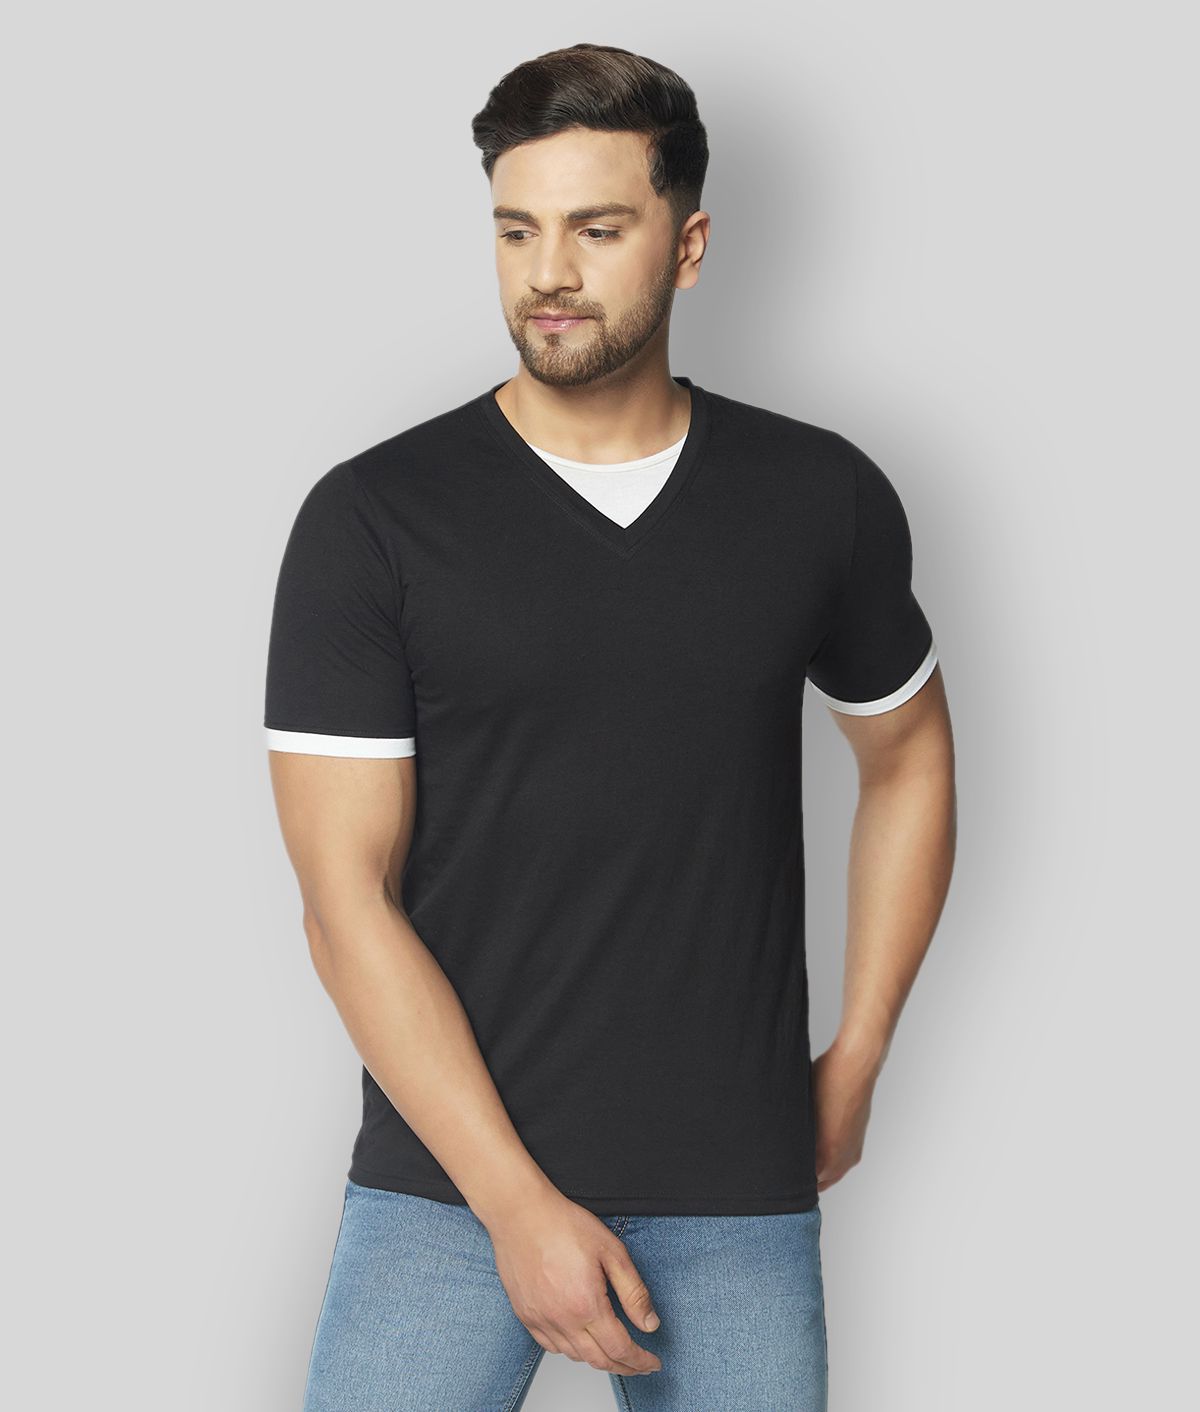     			Glito - Black Cotton Blend Slim Fit Men's T-Shirt ( Pack of 1 )